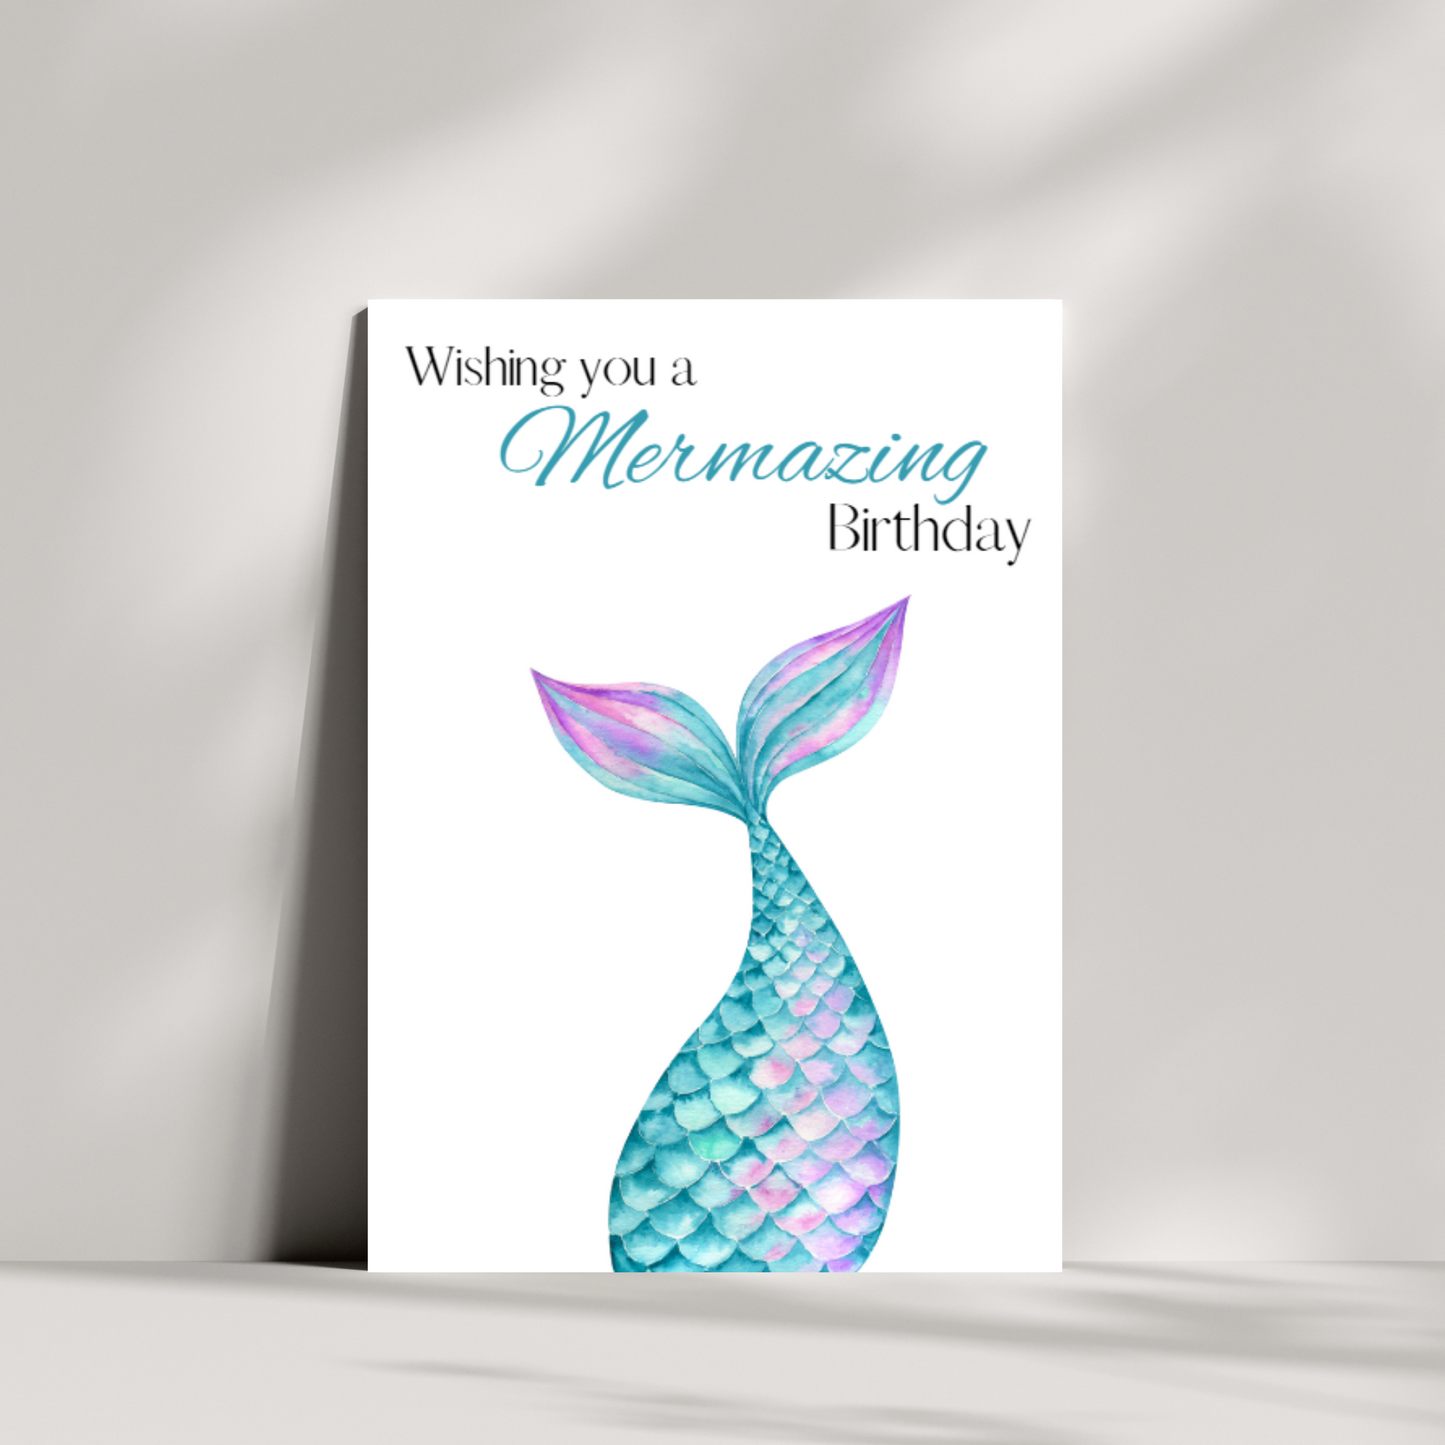 wishing you a mermazing birthday - birthday card